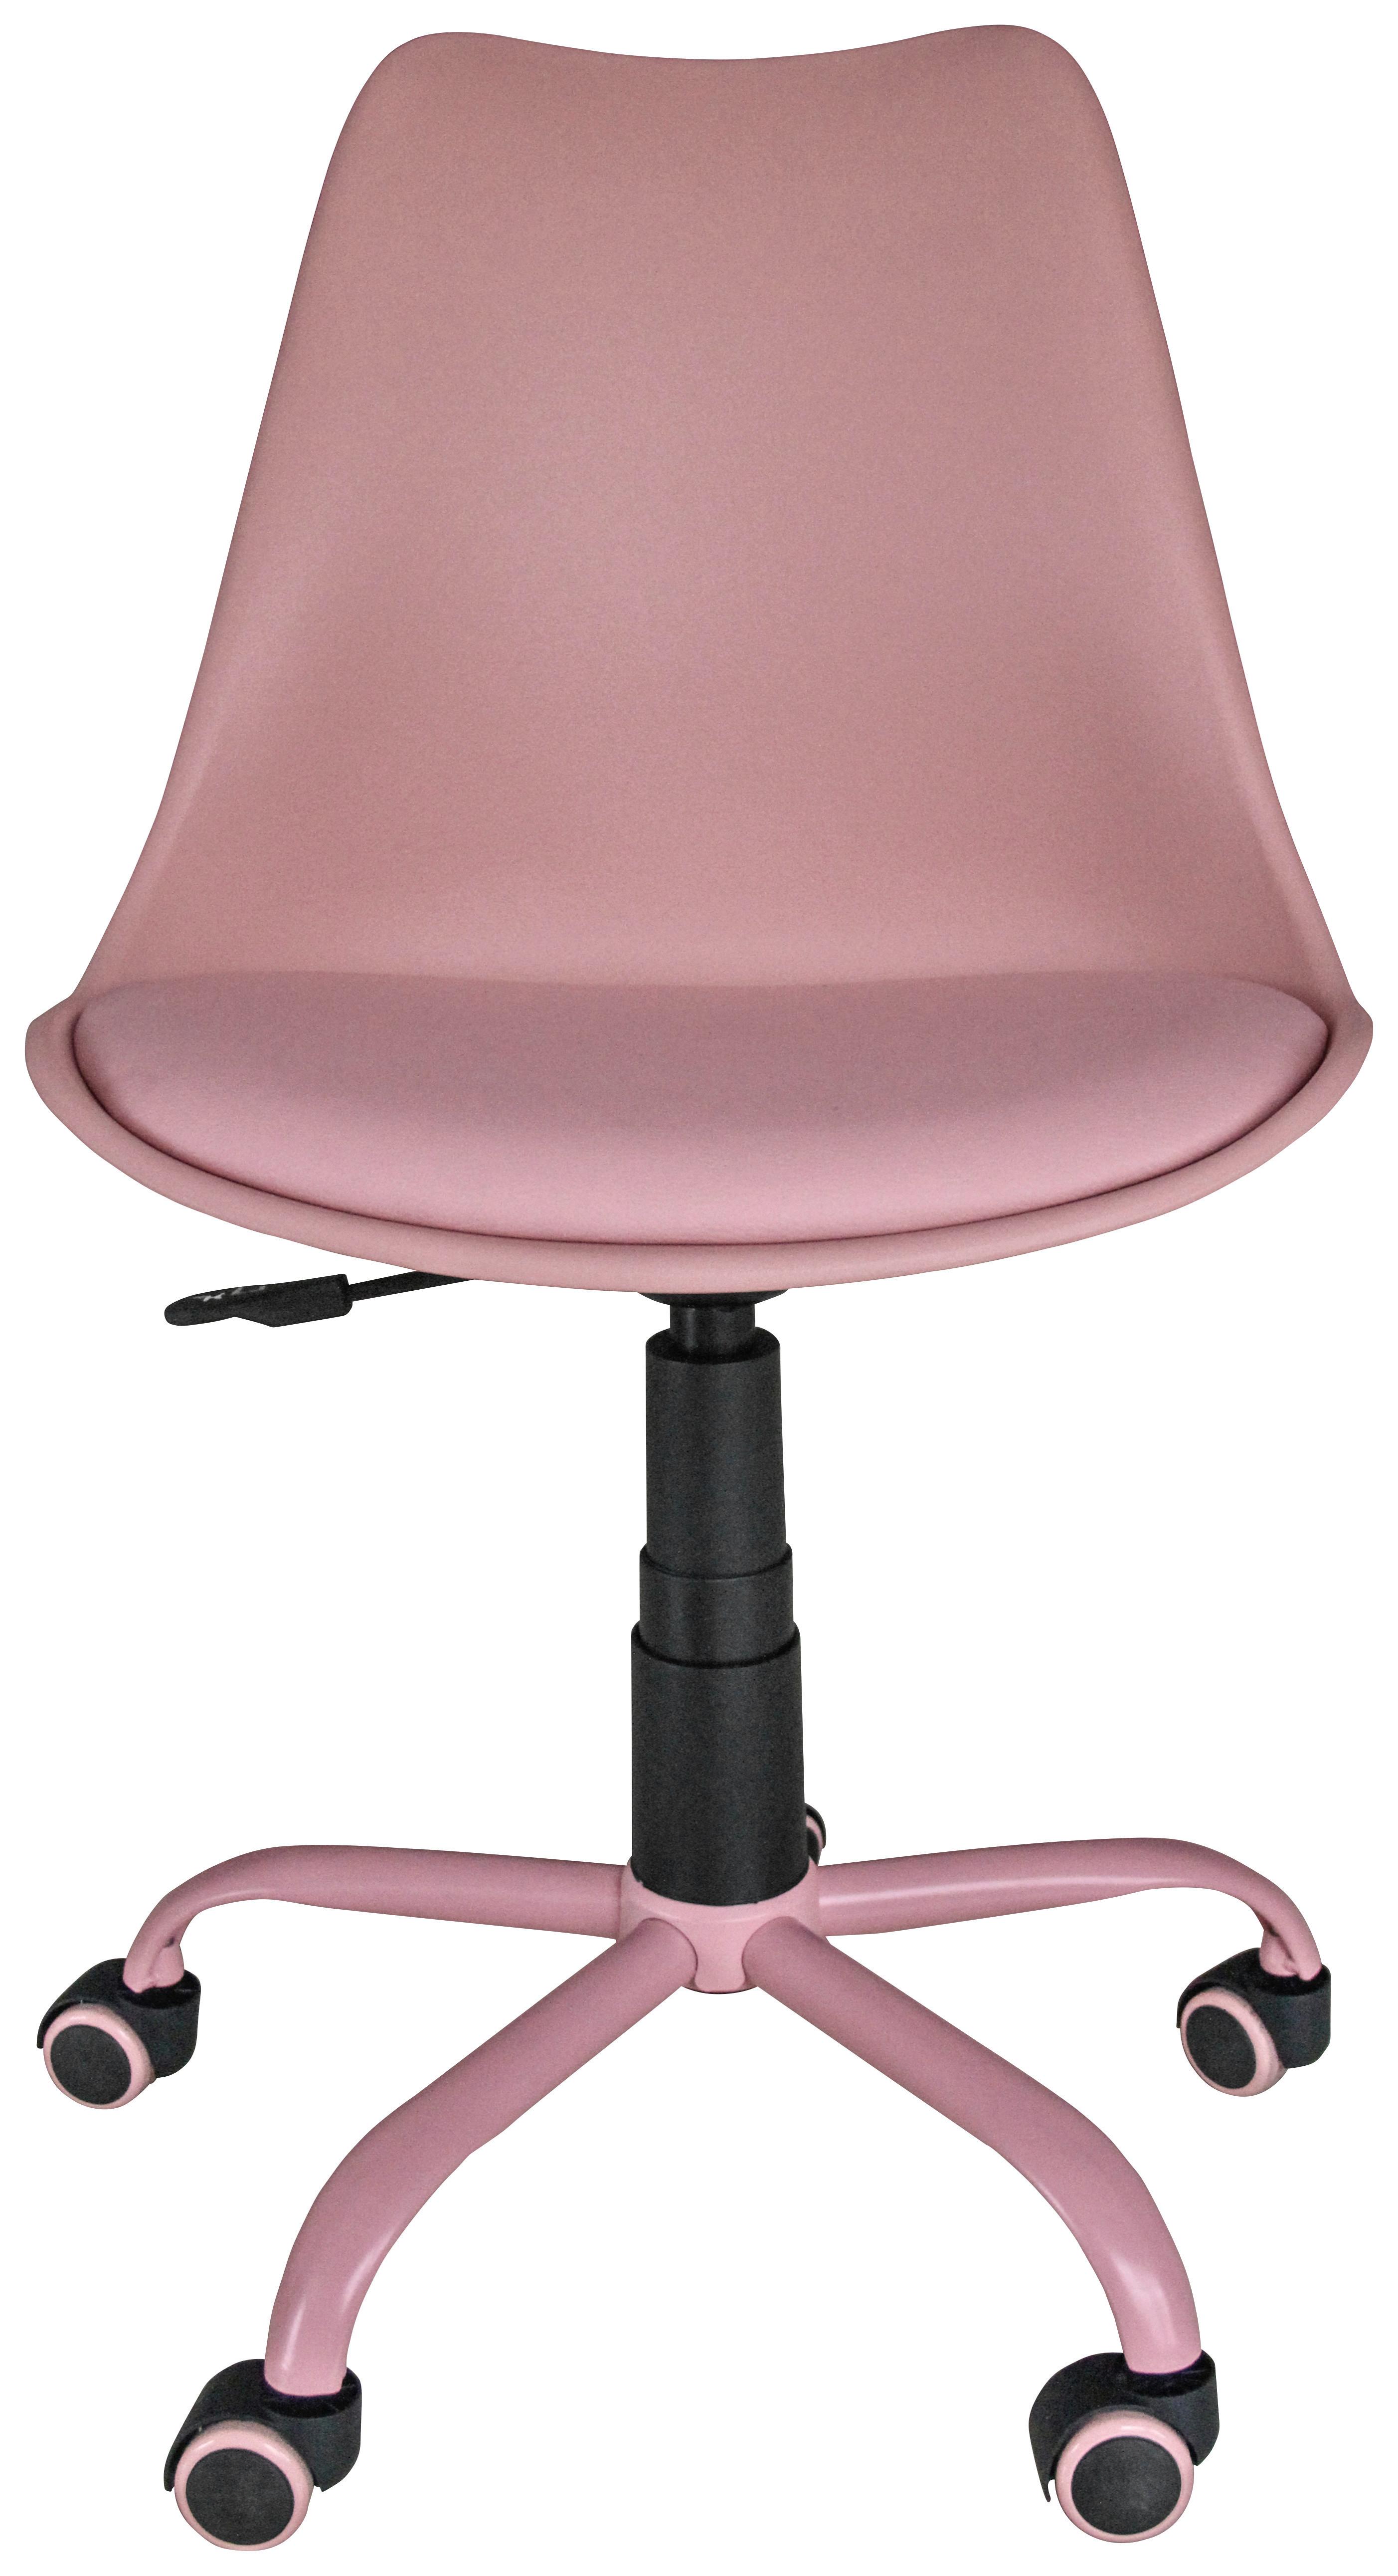 Otočná Židle Anna - růžová/černá, Moderní, kov/textil (55/79-87/48,5cm) - Modern Living